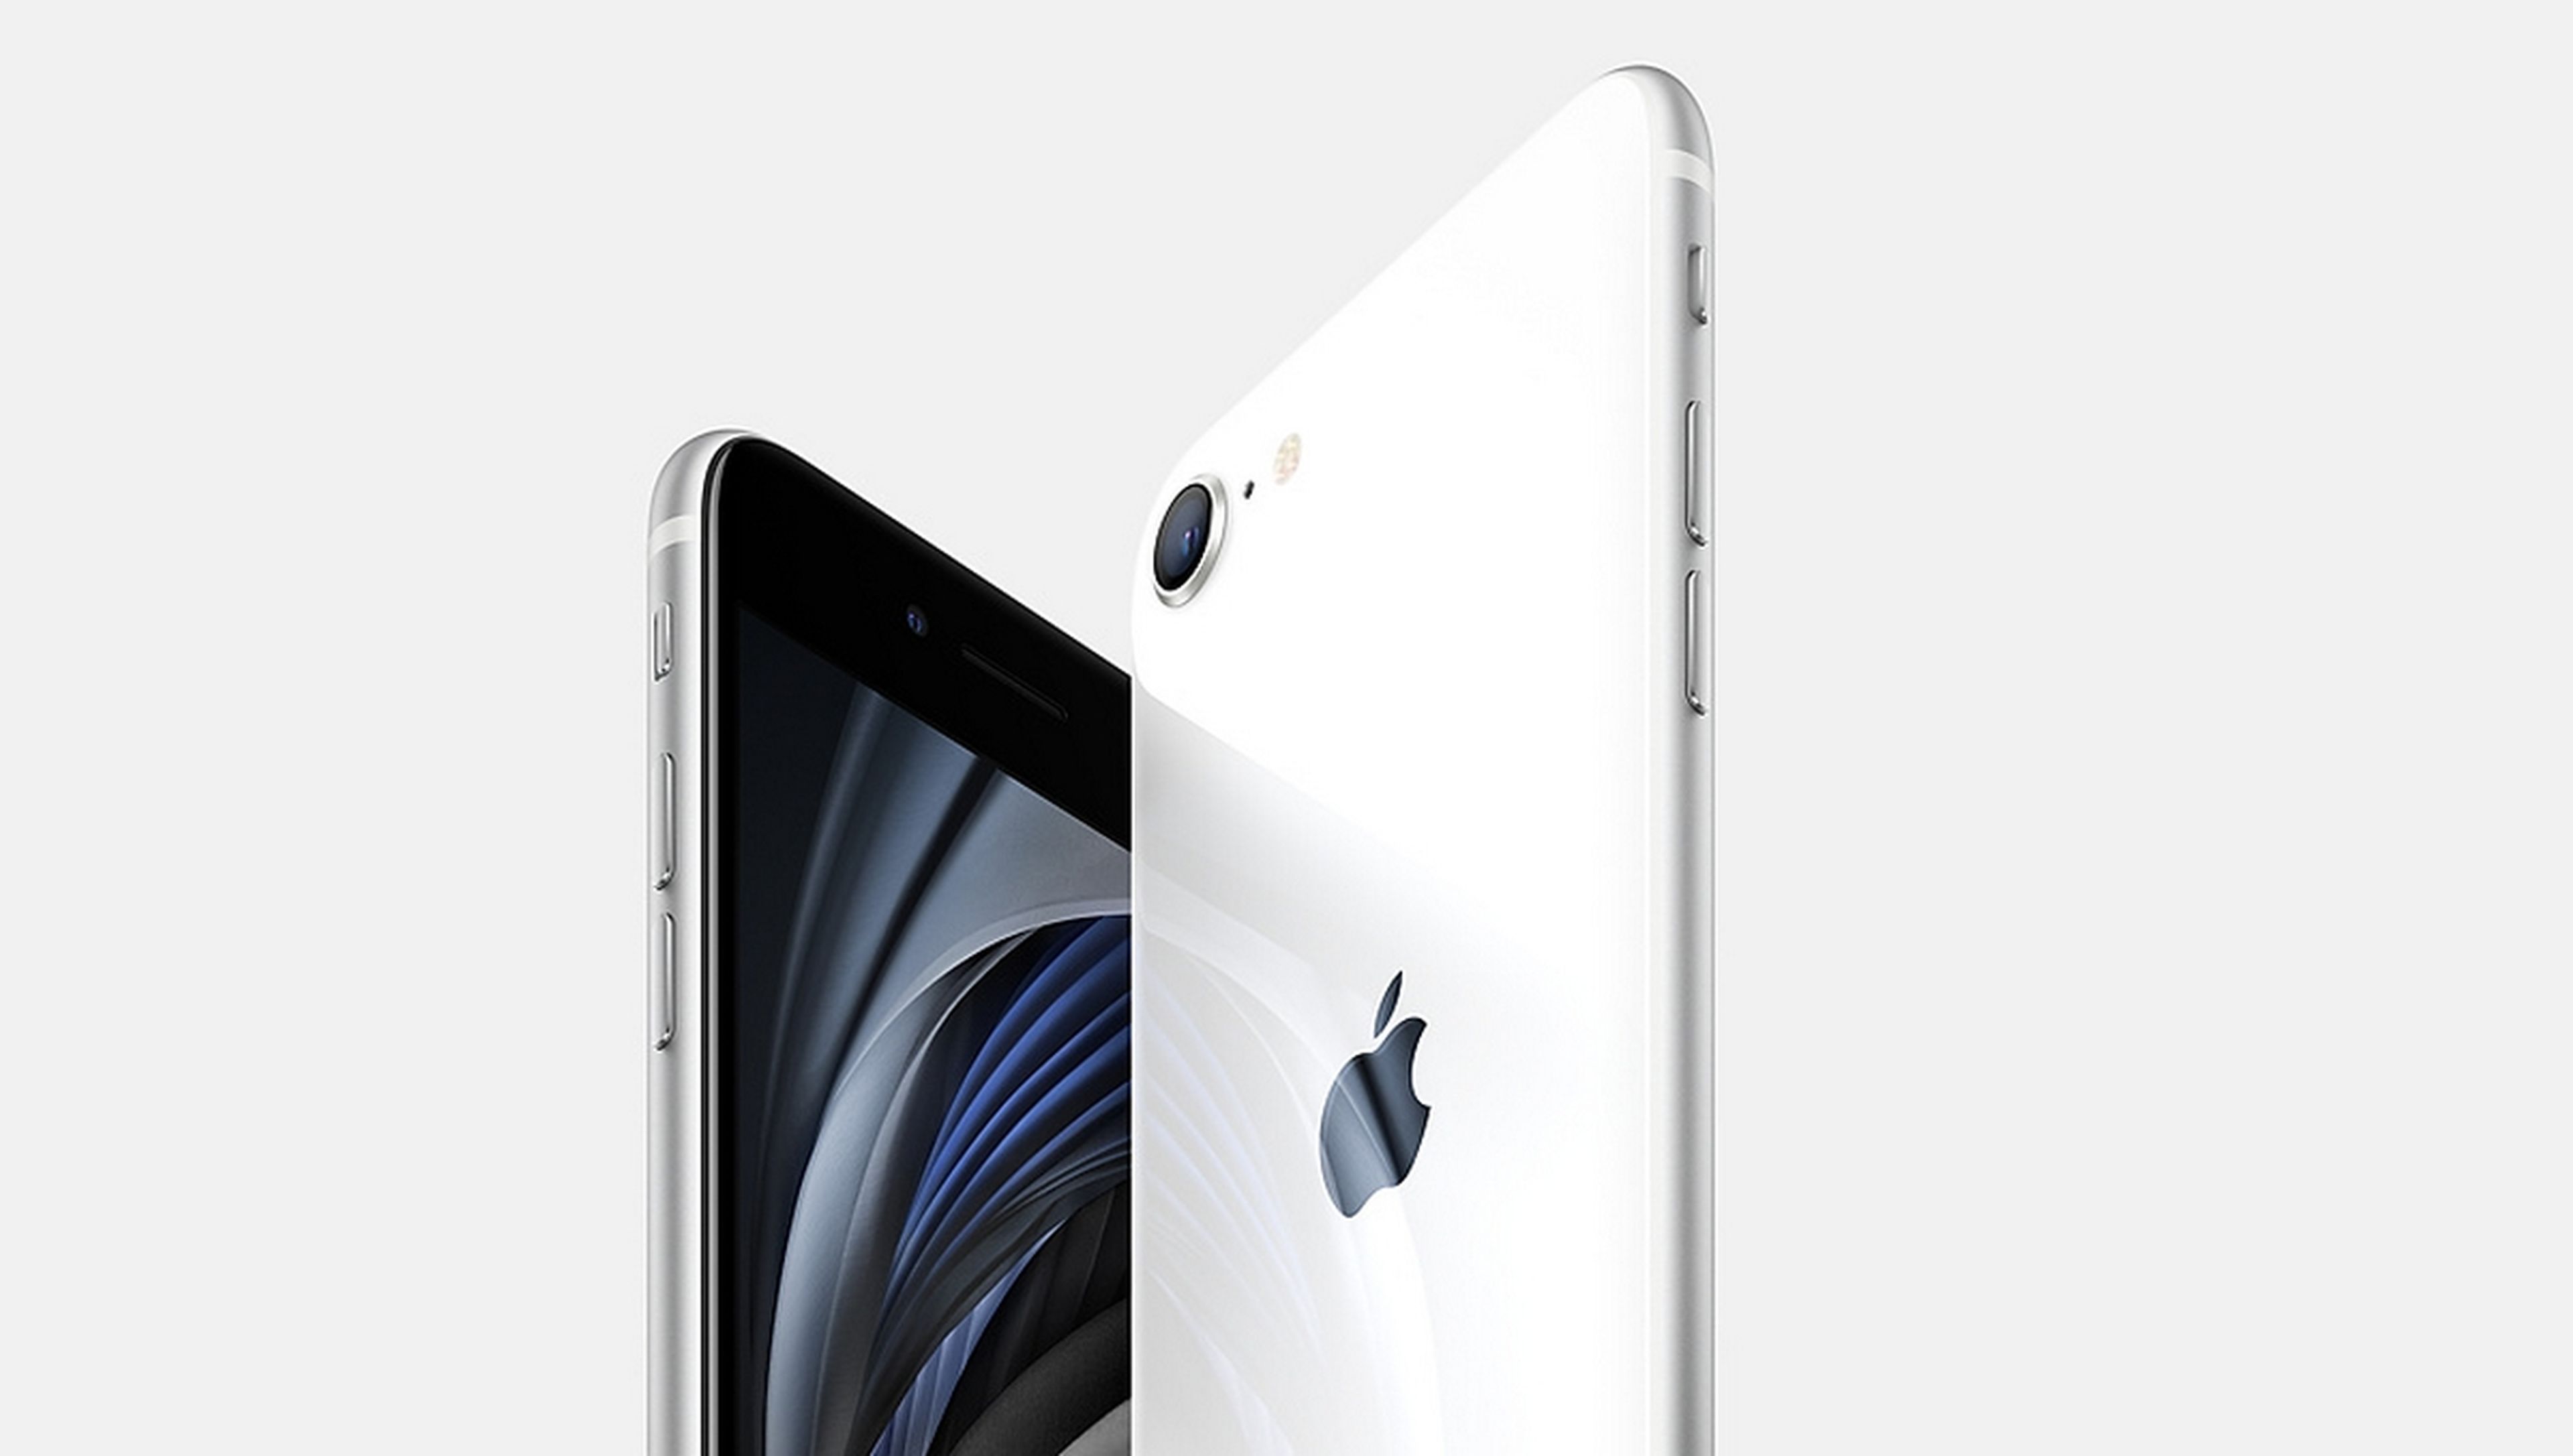 iPhone SE (2020) frente al iPhone 11, iPhone 8 y iPhone XR, ¿merece la pena?